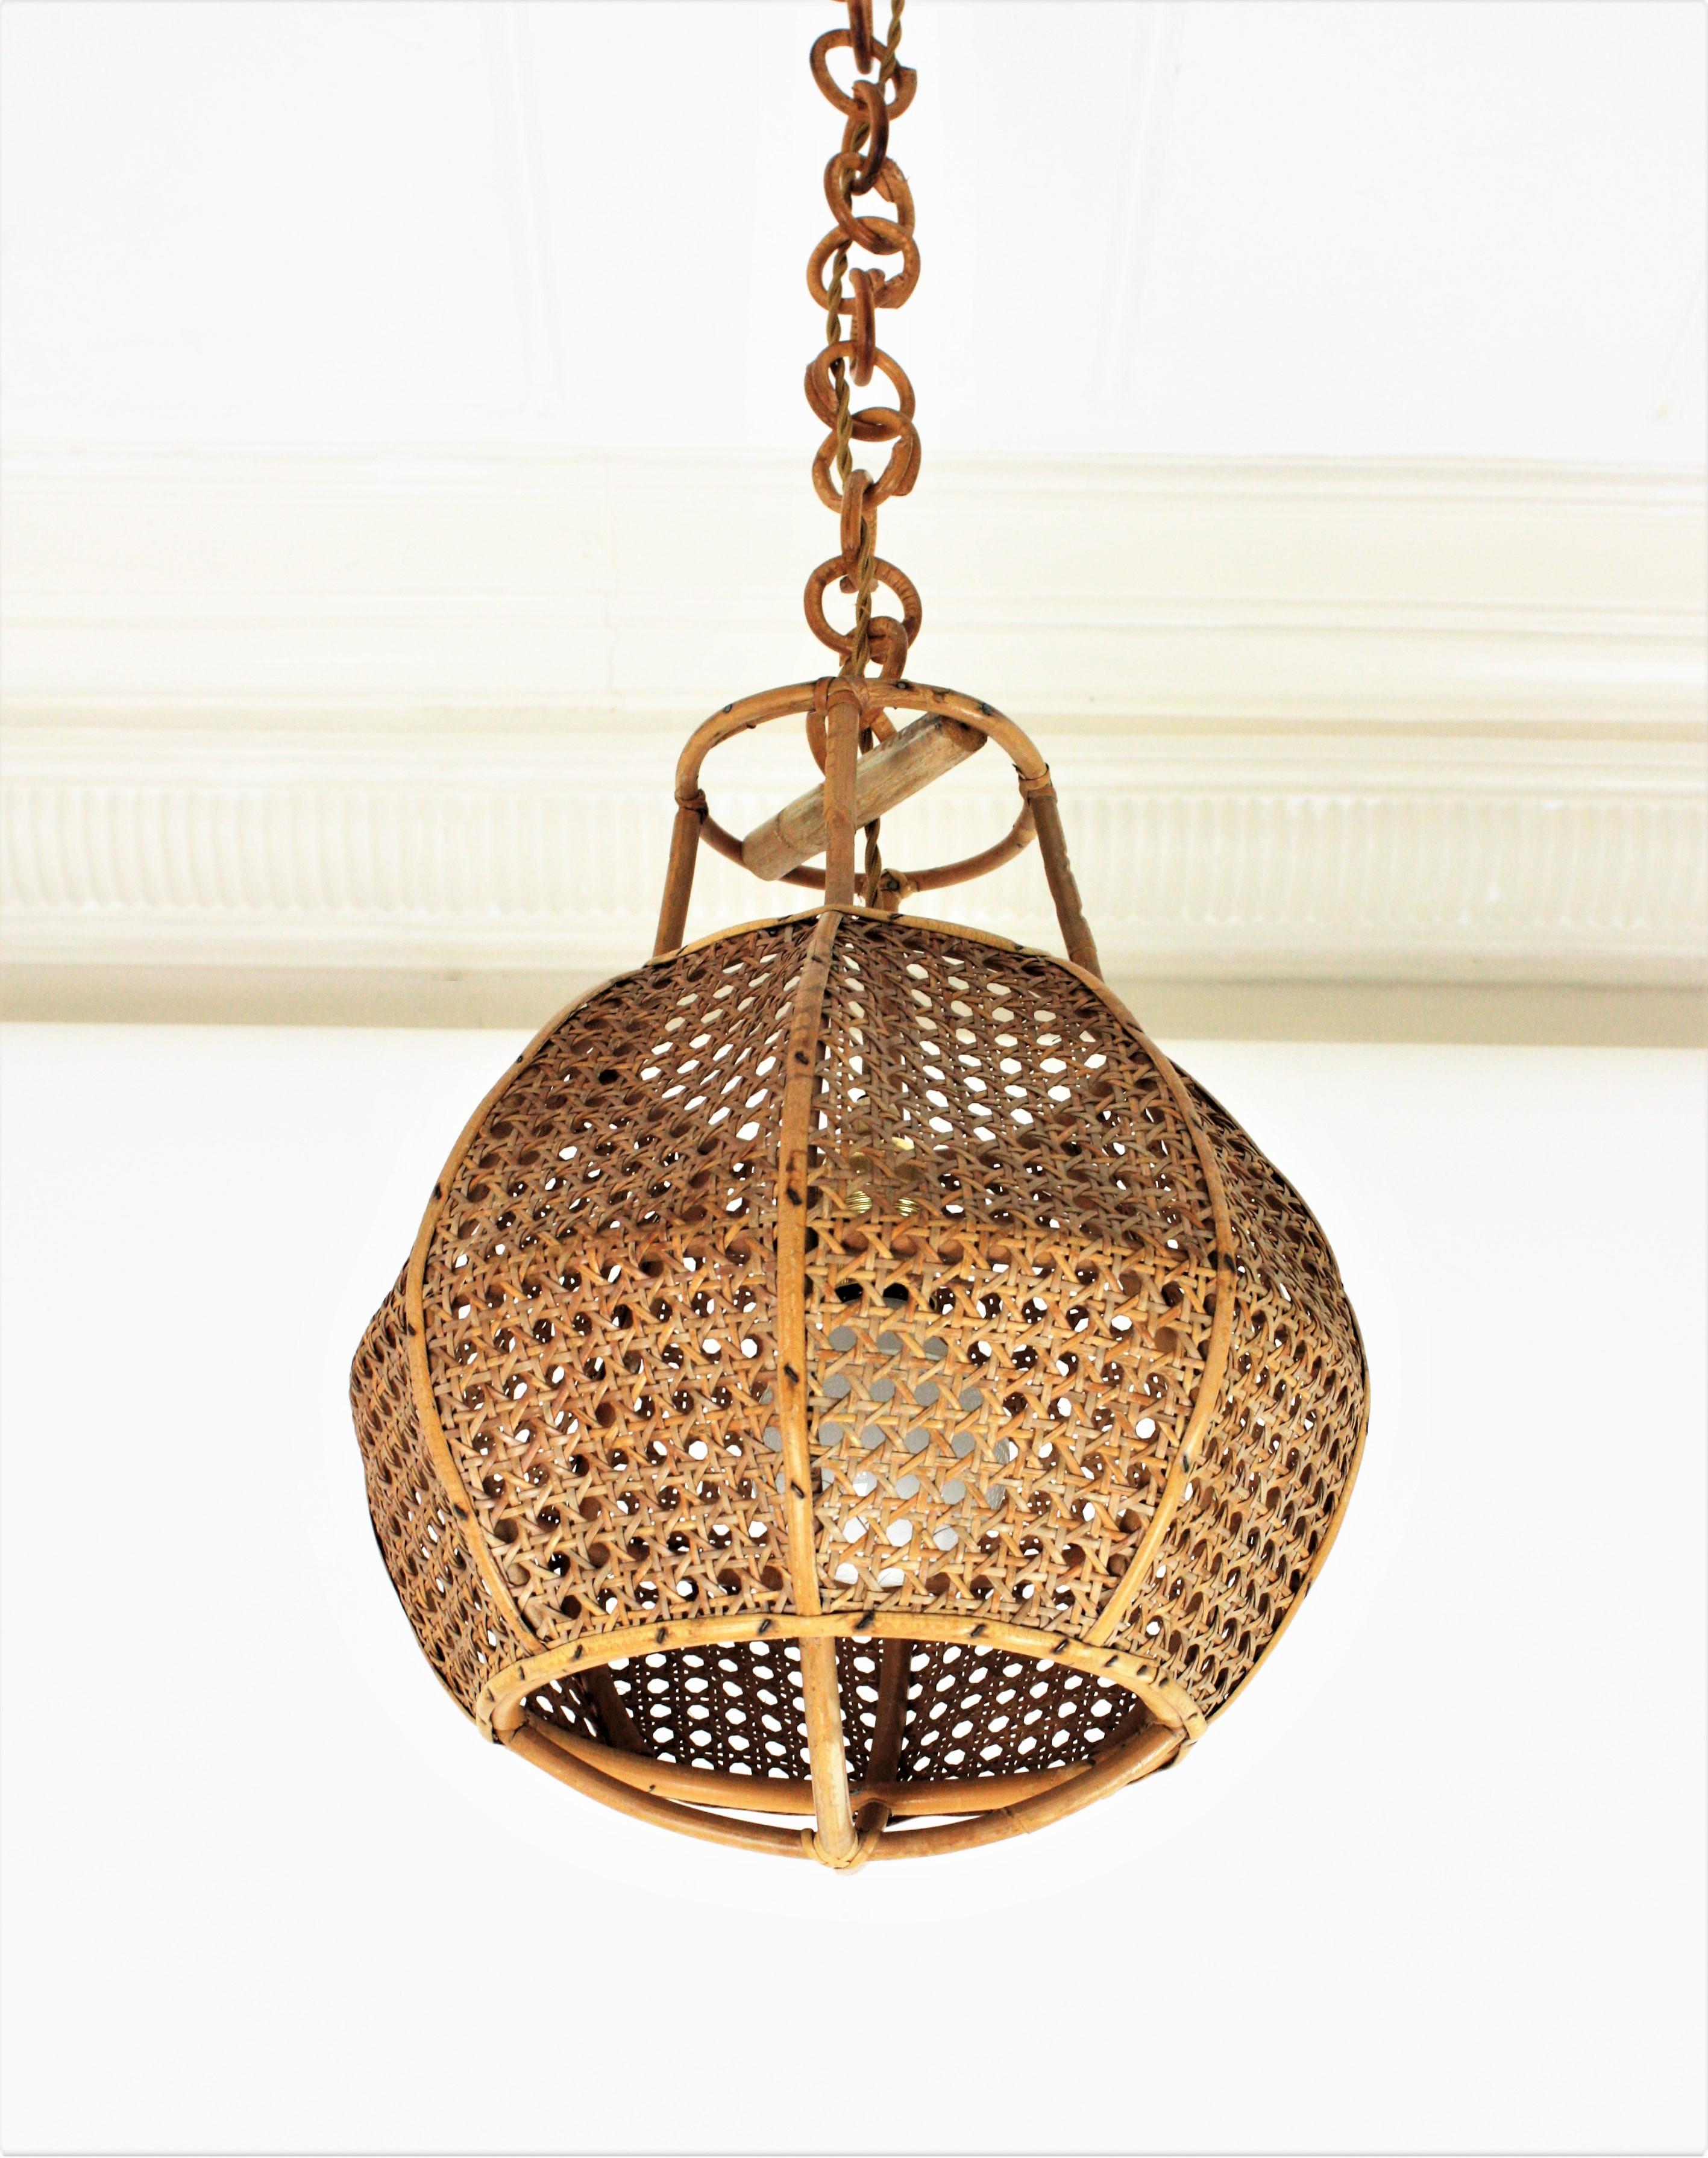 20th Century Italian Modernist Wicker Wire and Rattan Globe Pendant / Hanging Light, 1950s